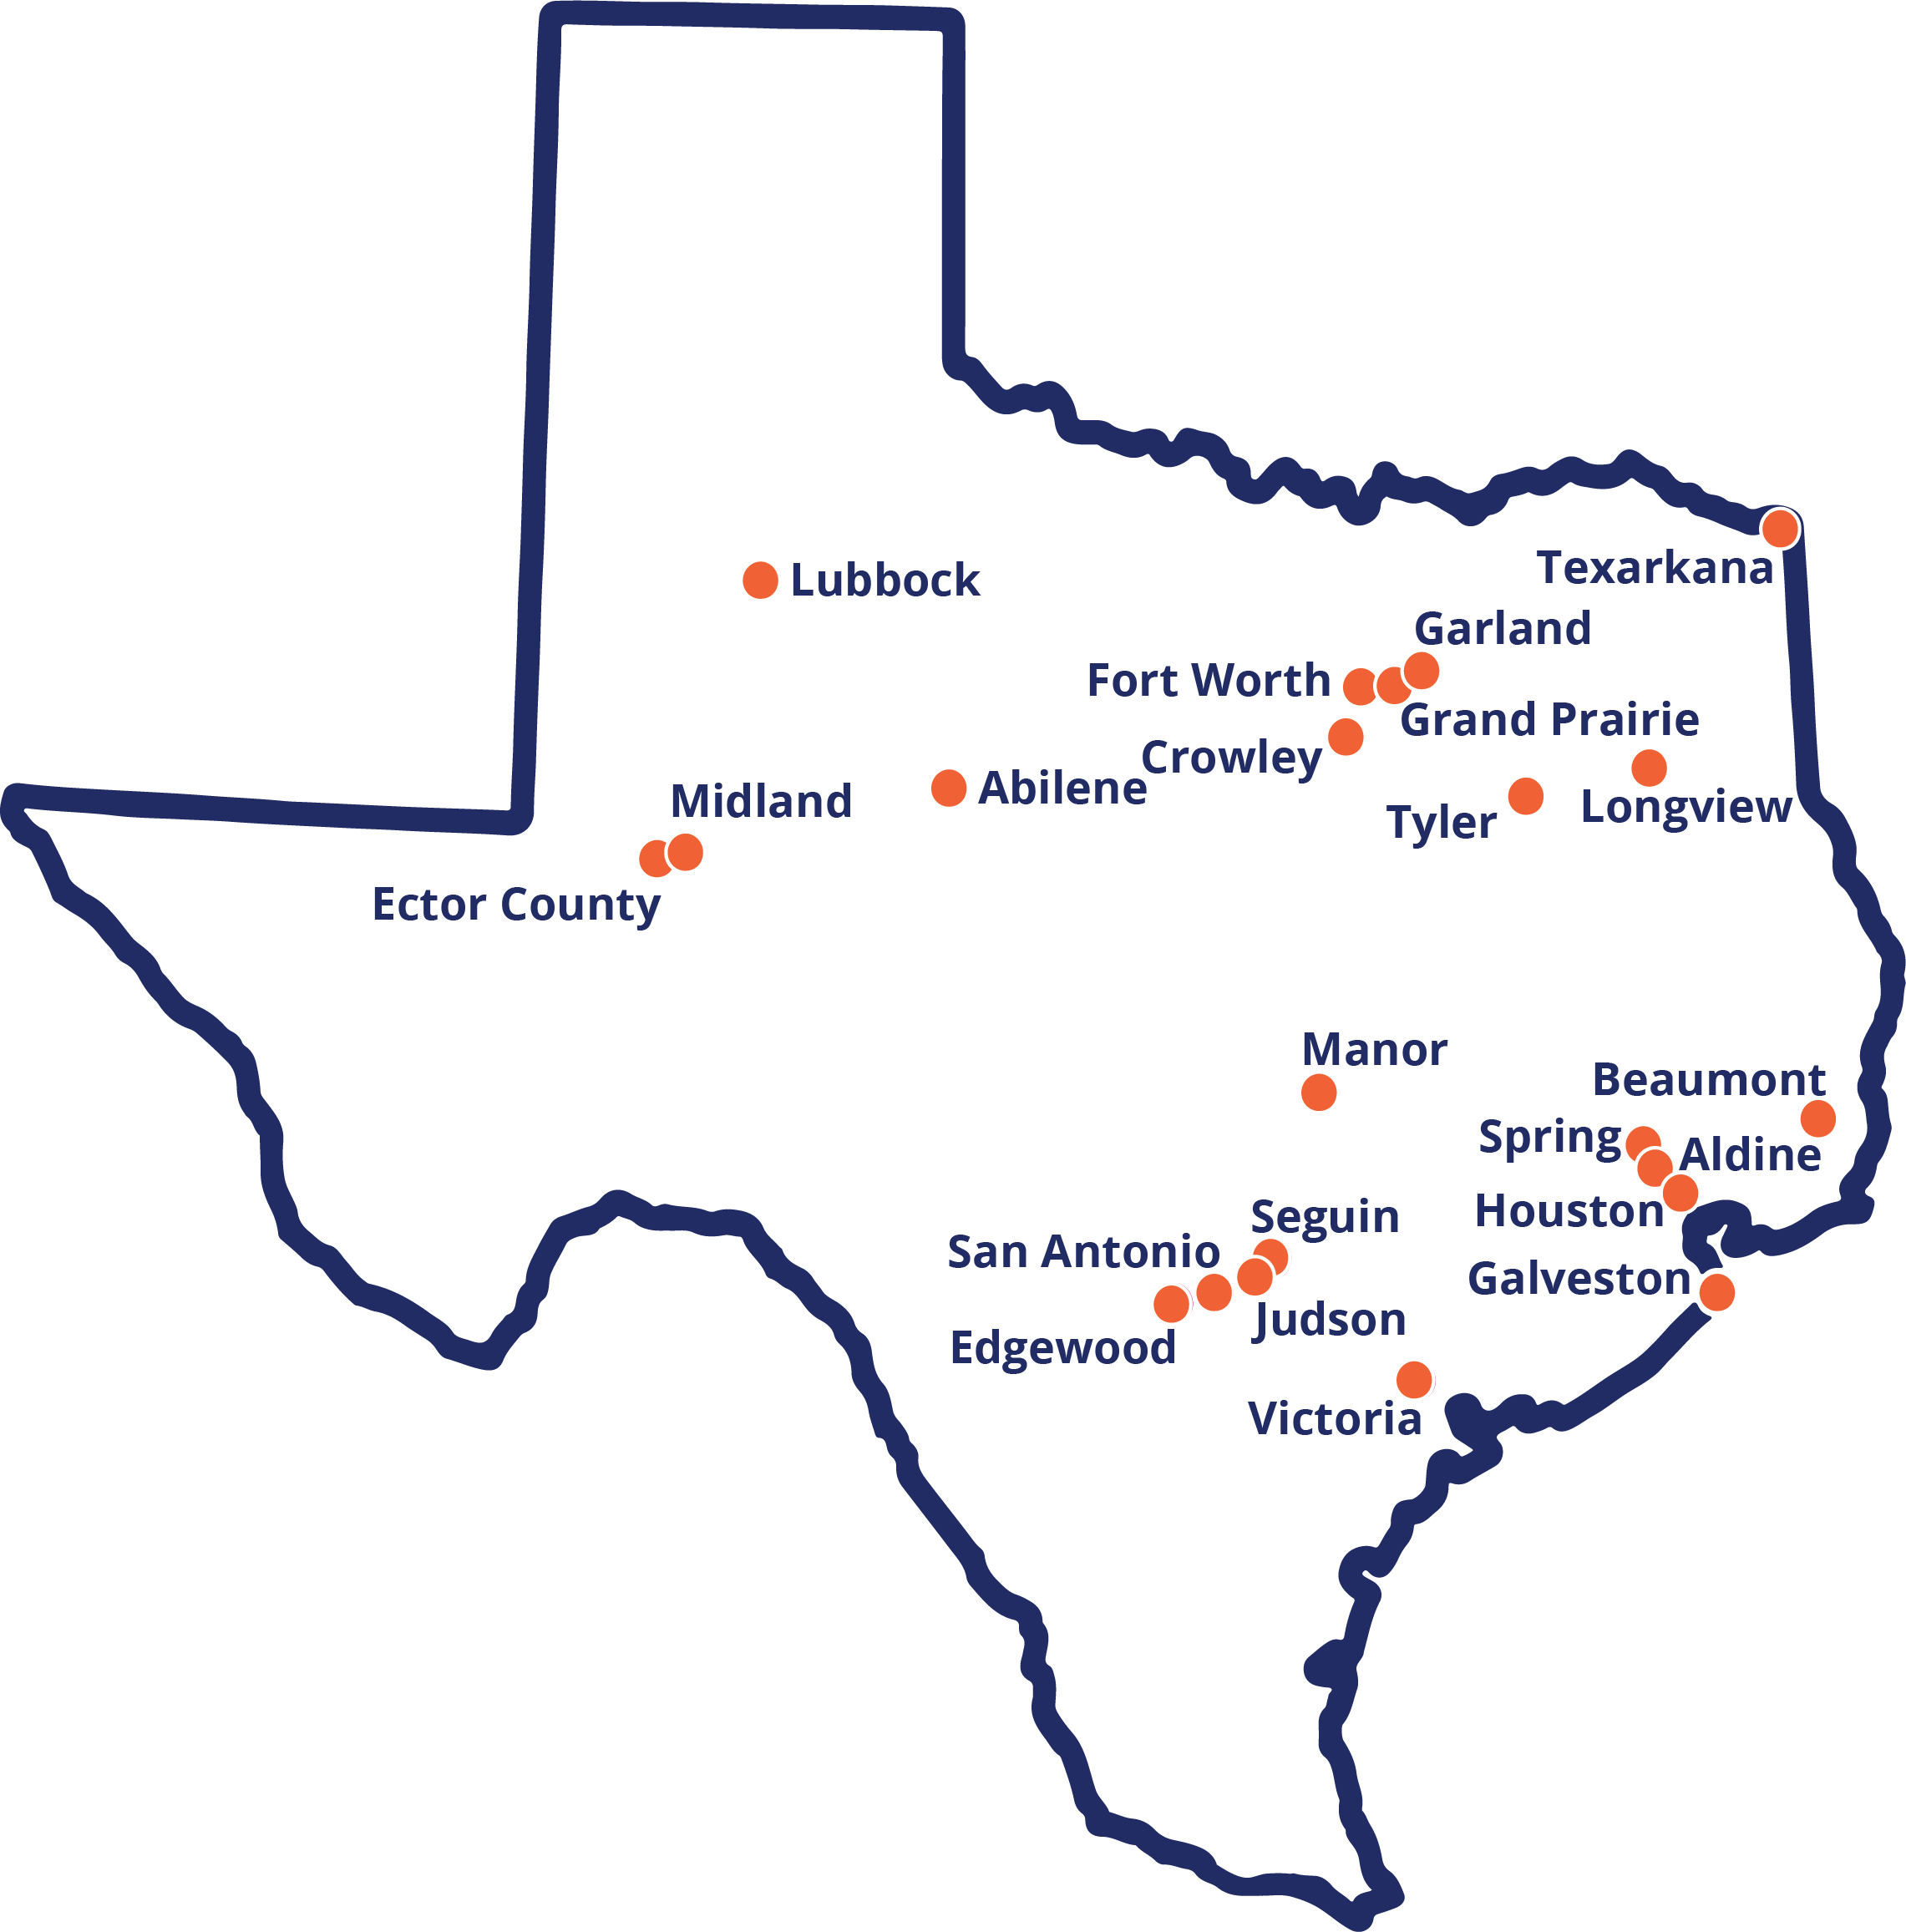 Map of Texas with 22 SGS Districts represented including: Abilene, Lubbock, Midland, Ector County, Texarkana, Garland, Fort Worth, Grand Prairie, Crowley, Tyler, Longview, Manor, Beaumont, Spring, Aldine, Houston, Galveston, Seguin, San Antonio, Edgewood, Judson, Victoria, PSJA